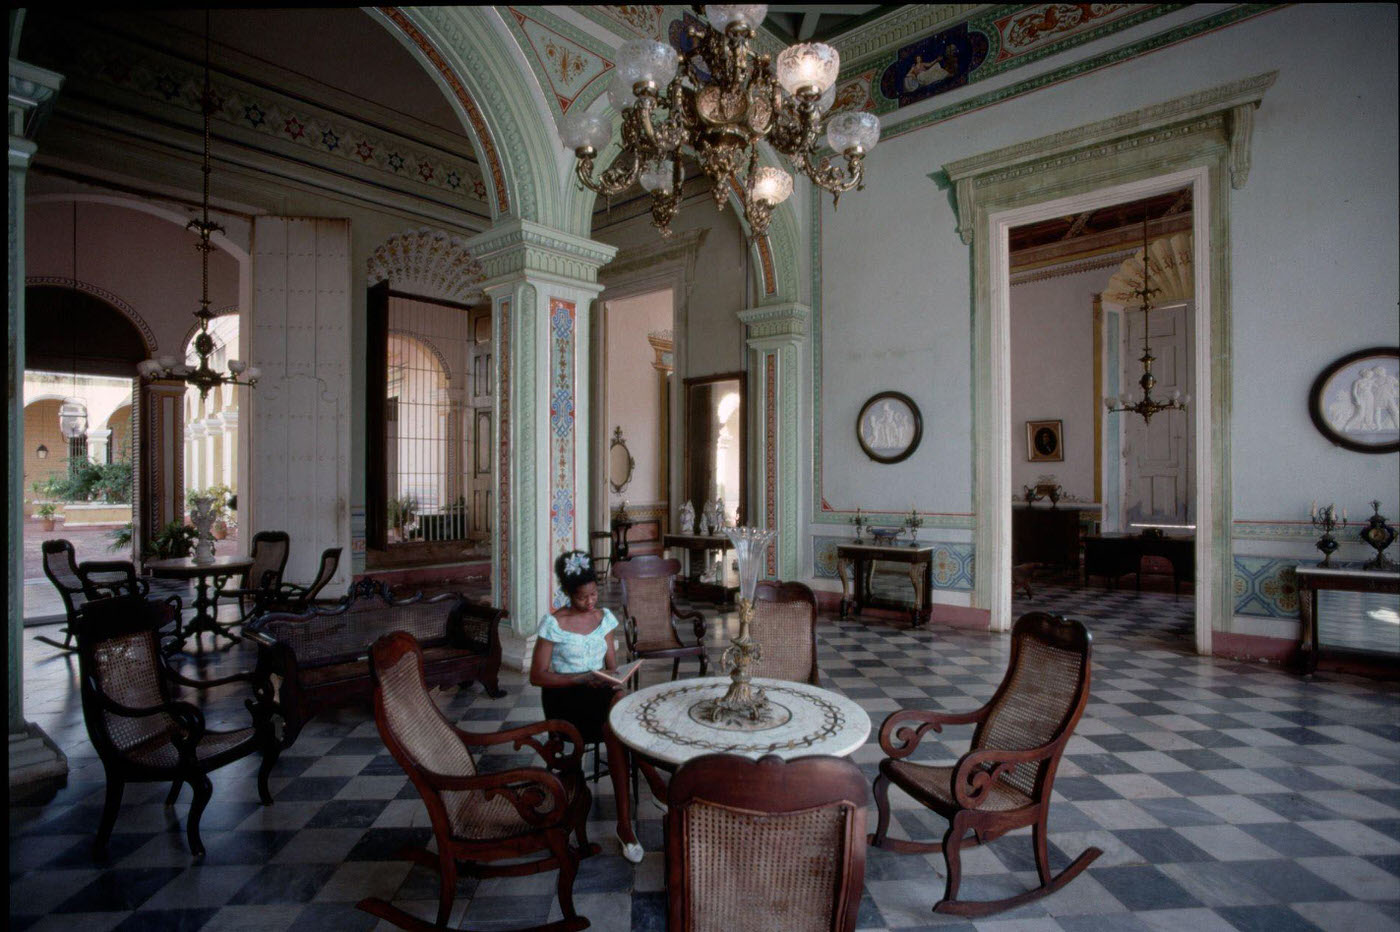 Interior of the Museum of Decorative Arts in Trinidad, Cuba.